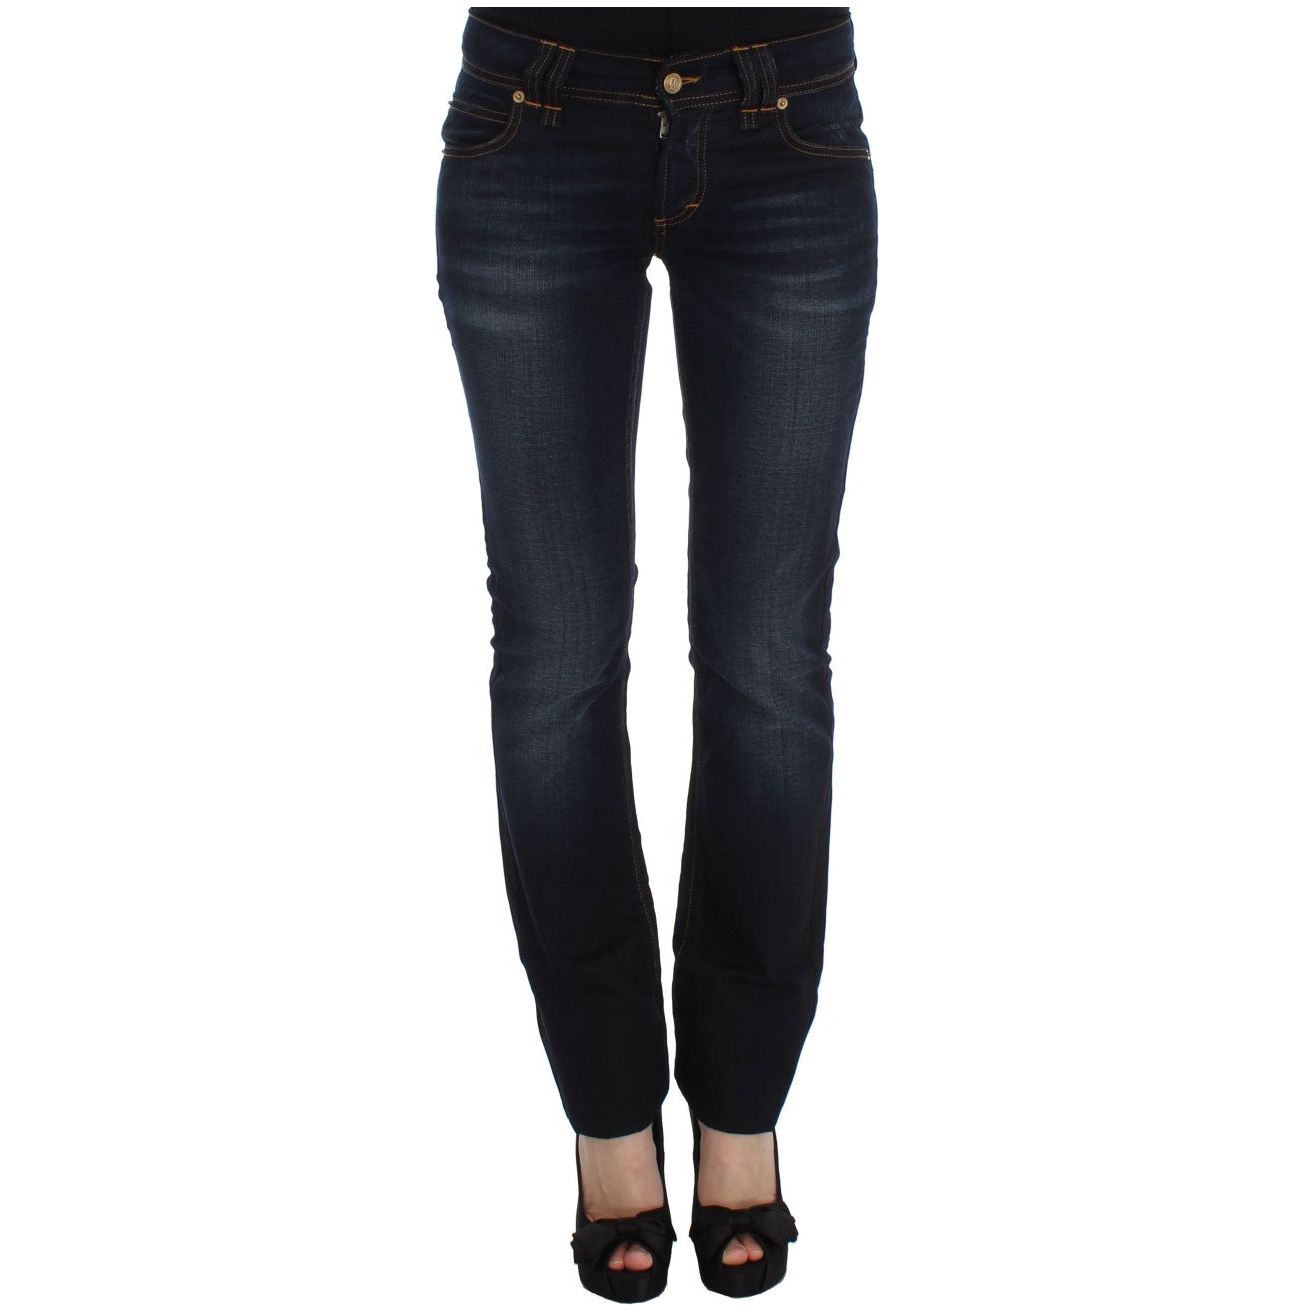 John Galliano Elegant Slim Fit Designer Jeans blue-wash-cotton-slim-fit-jeans-1 329959-blue-wash-cotton-slim-fit-jeans-2.jpg